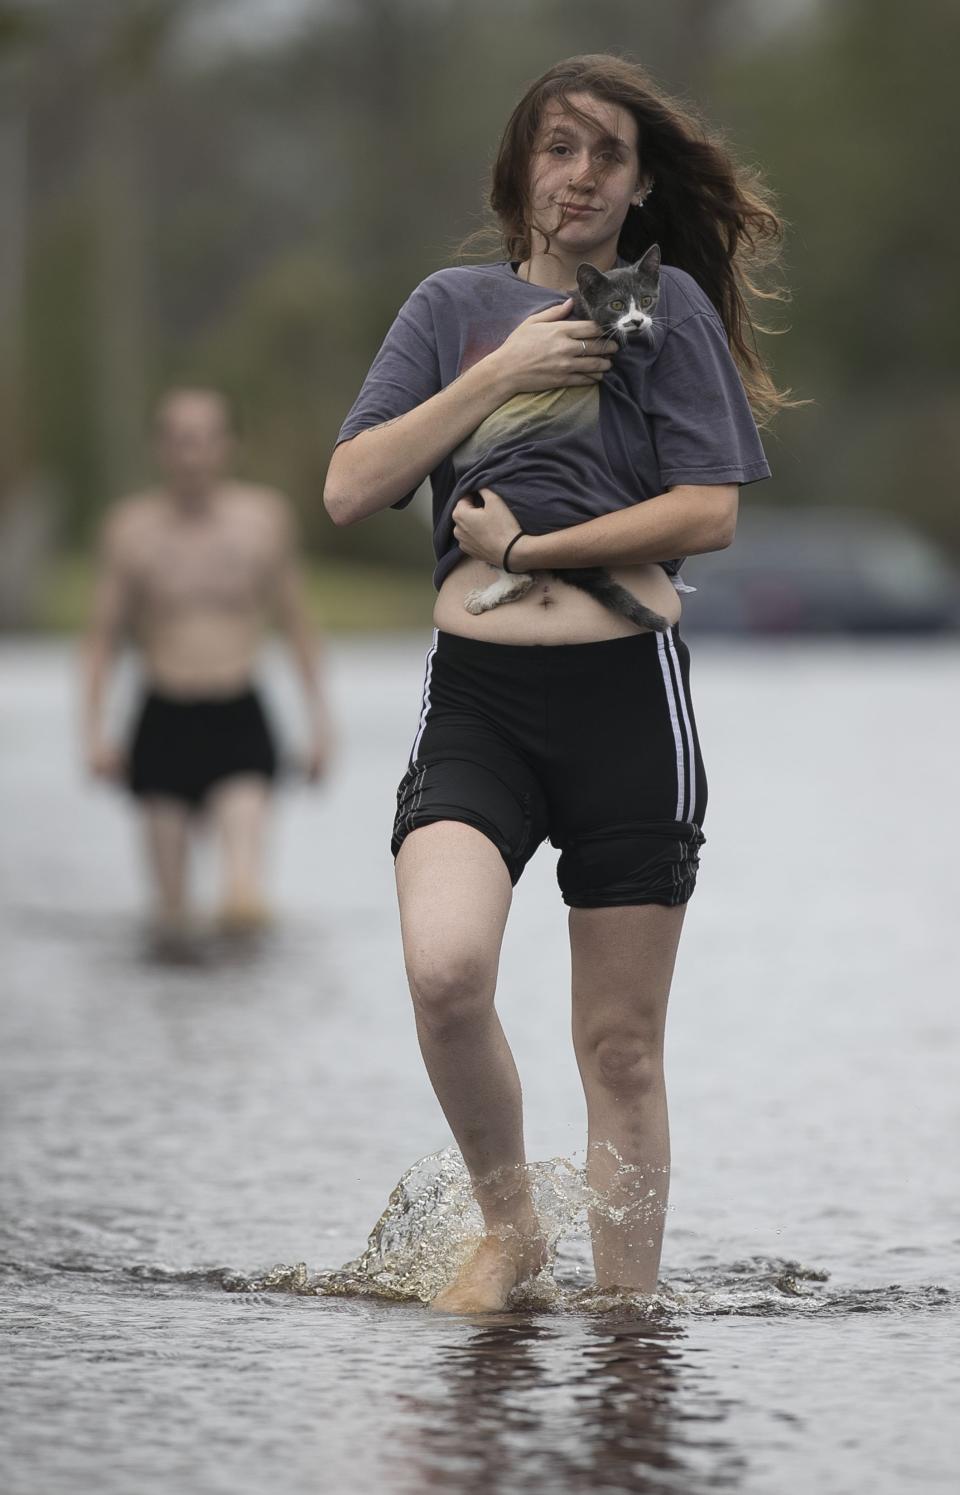 Saving pets after Hurricane Florence